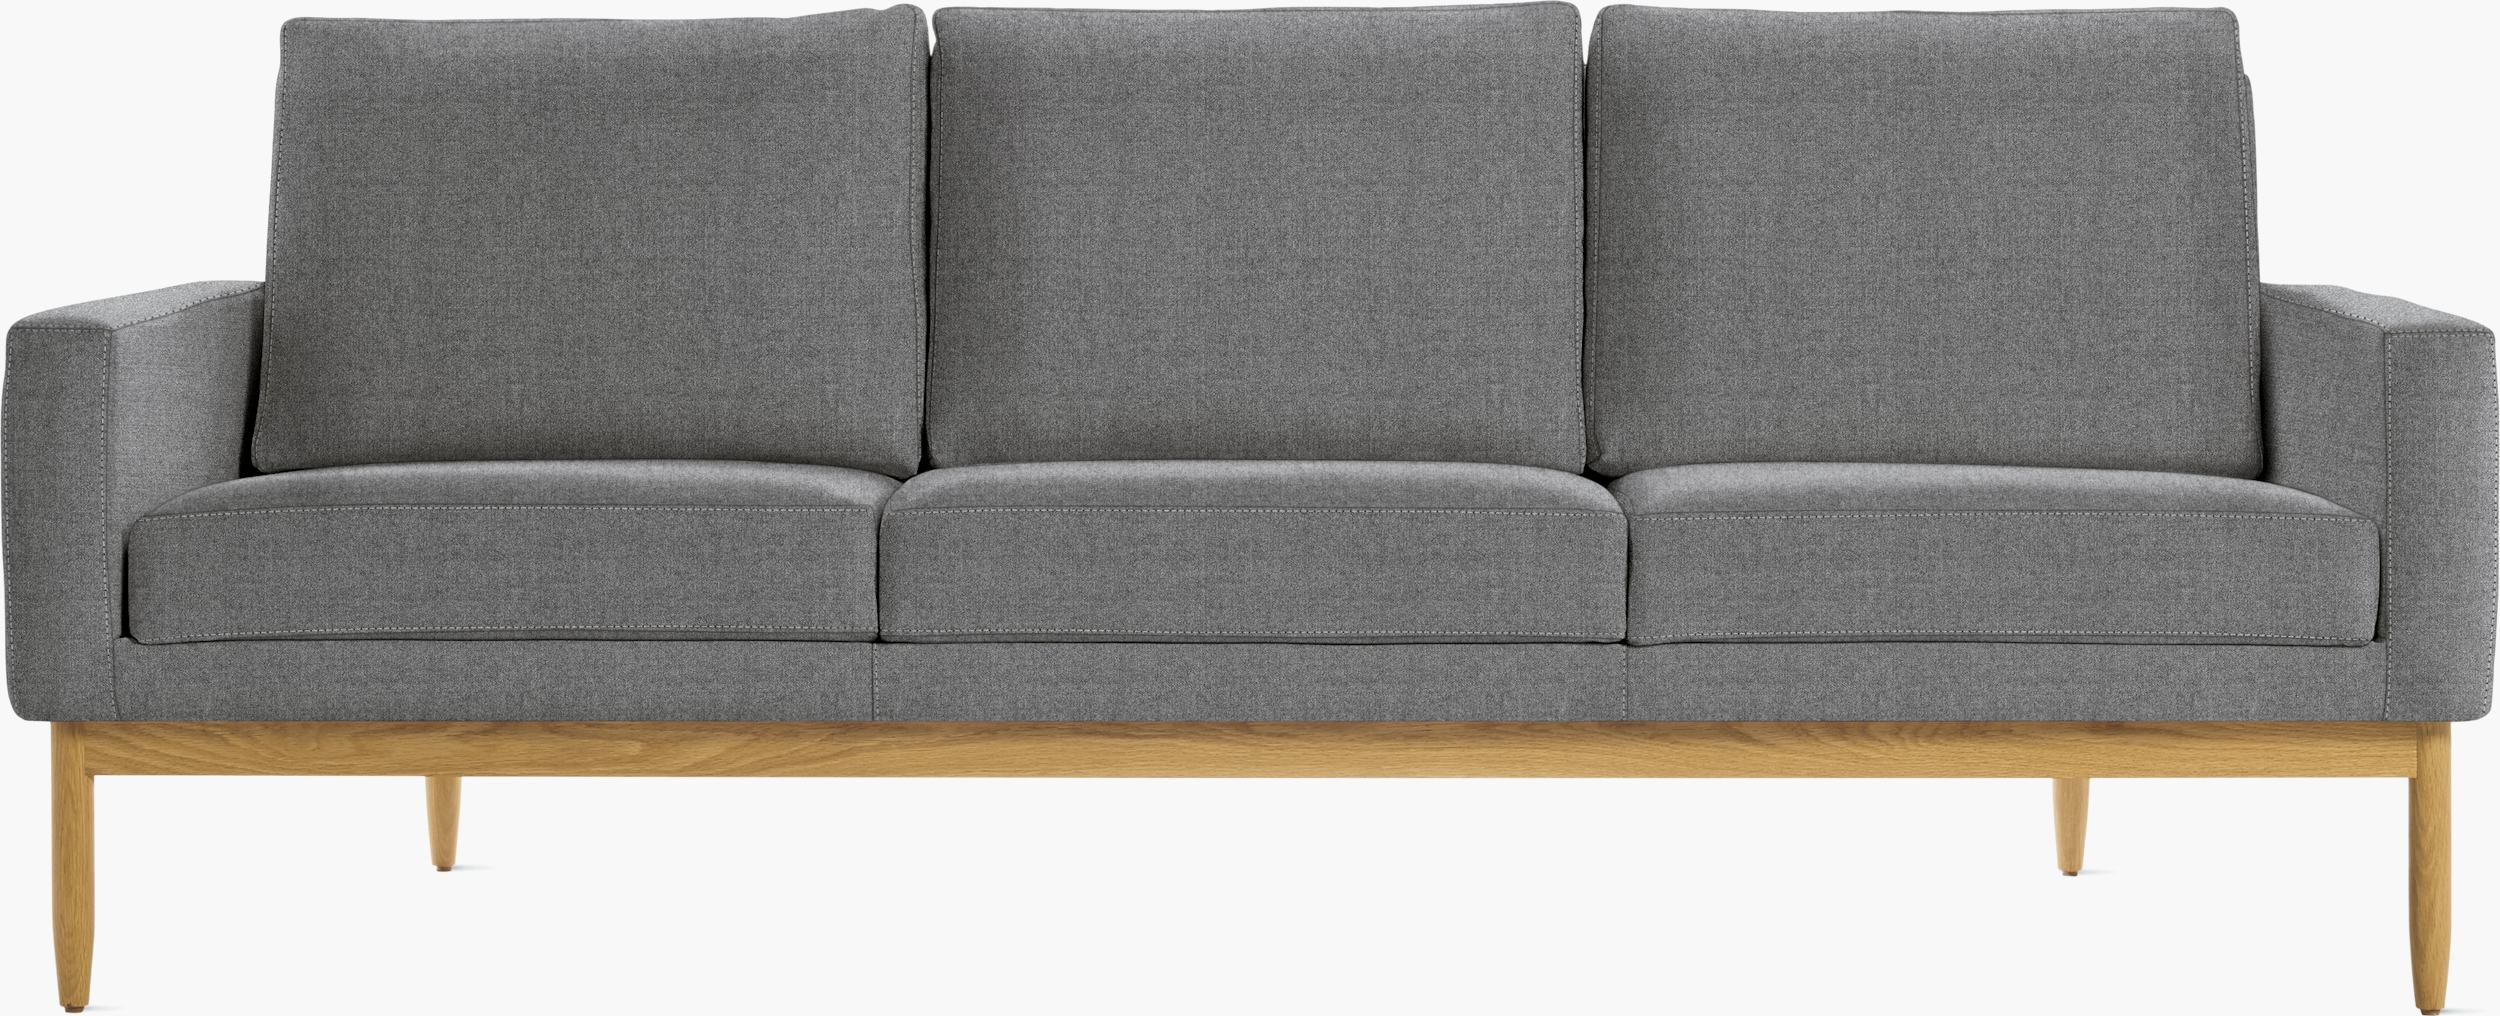 Raleigh Sofa Design Within Reach